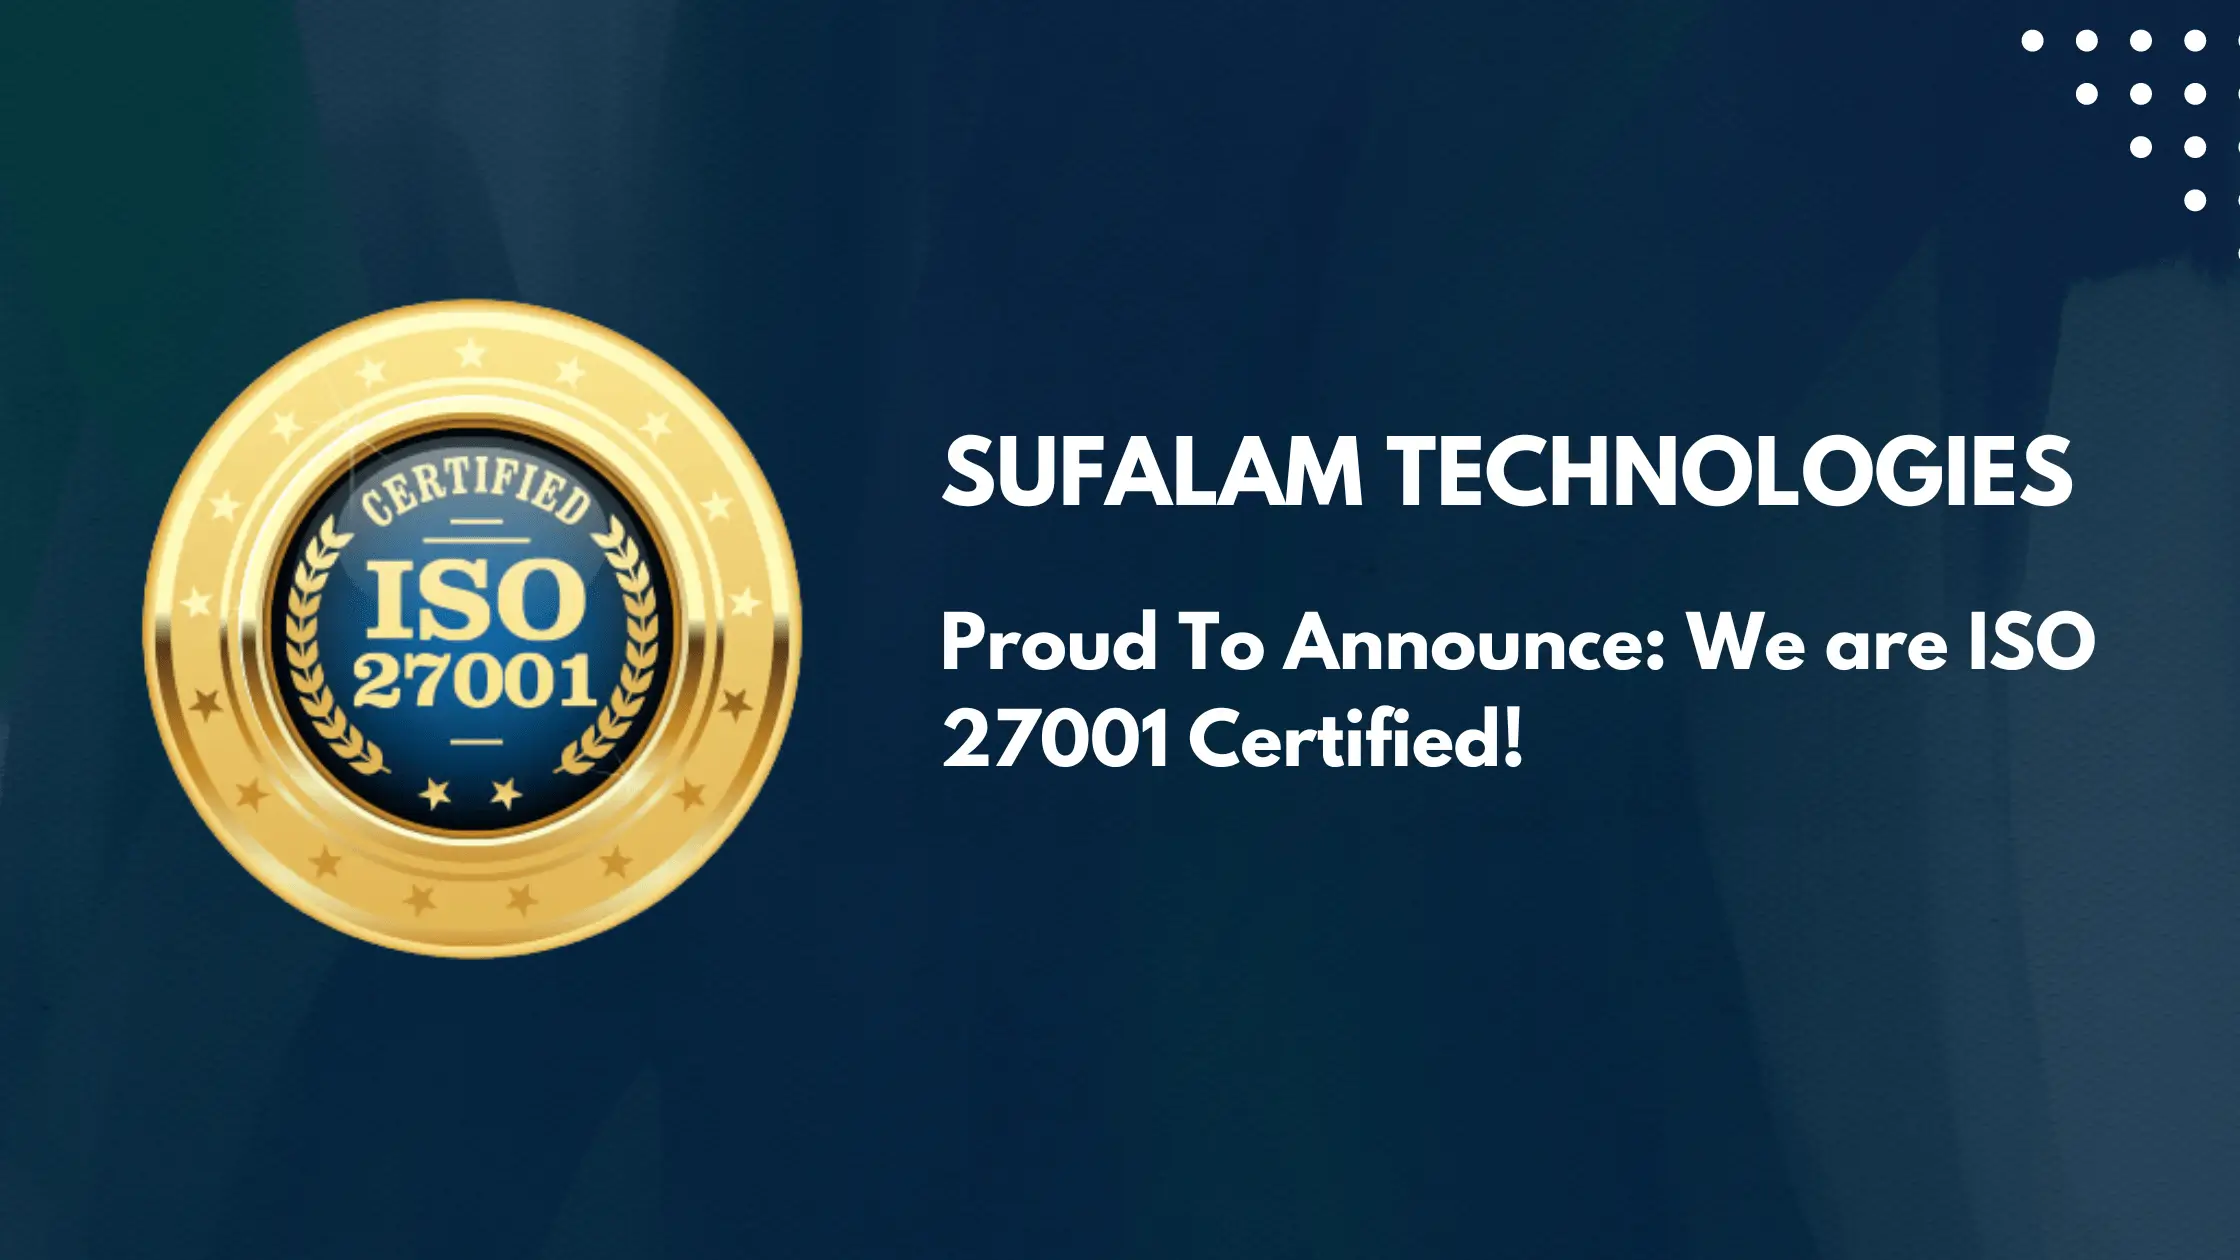 Sufalam-Technologies-_3_-min-1